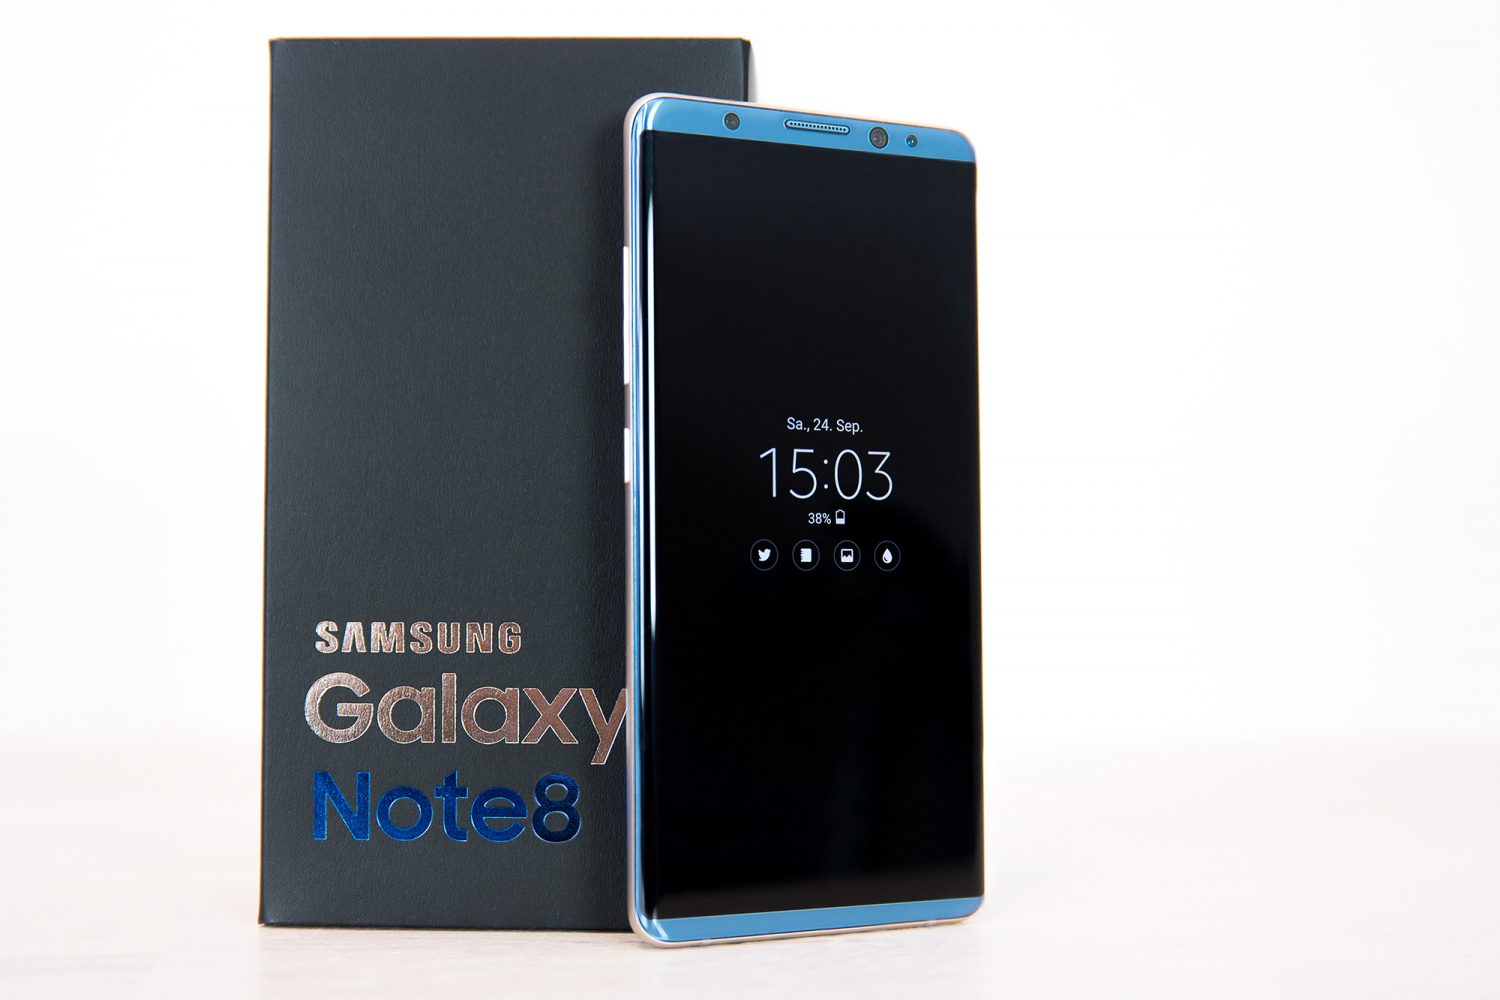 Samsung Galaxy Note8 by AllAboutSamsung